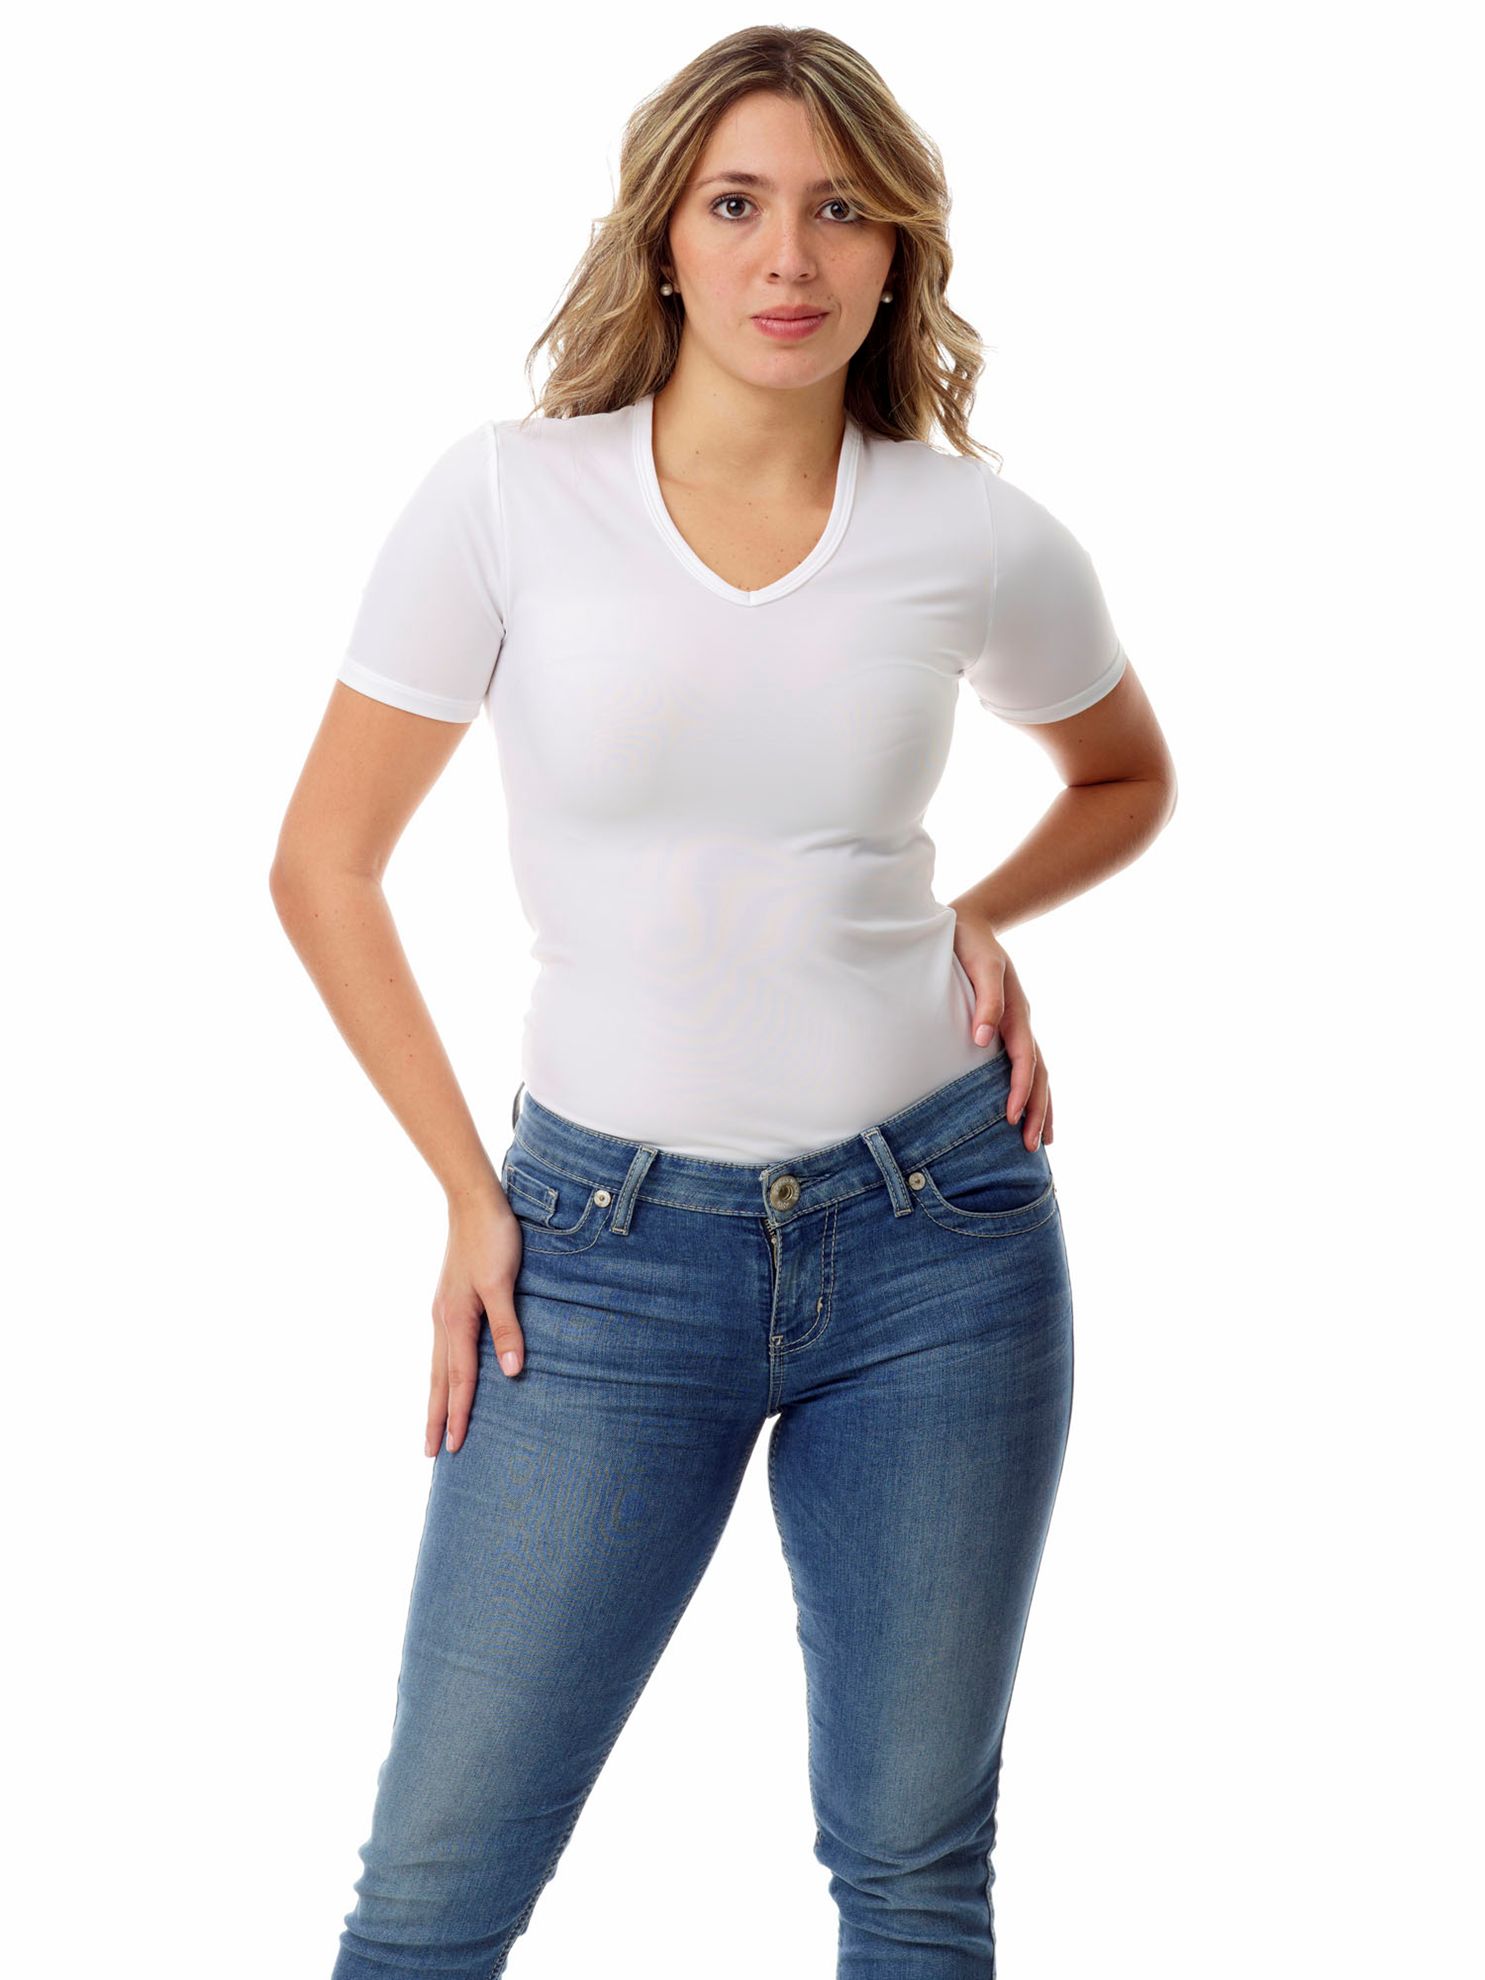 https://www.underworks.com/images/thumbs/0000286_womens-microfiber-v-neck-t-shirt.jpeg